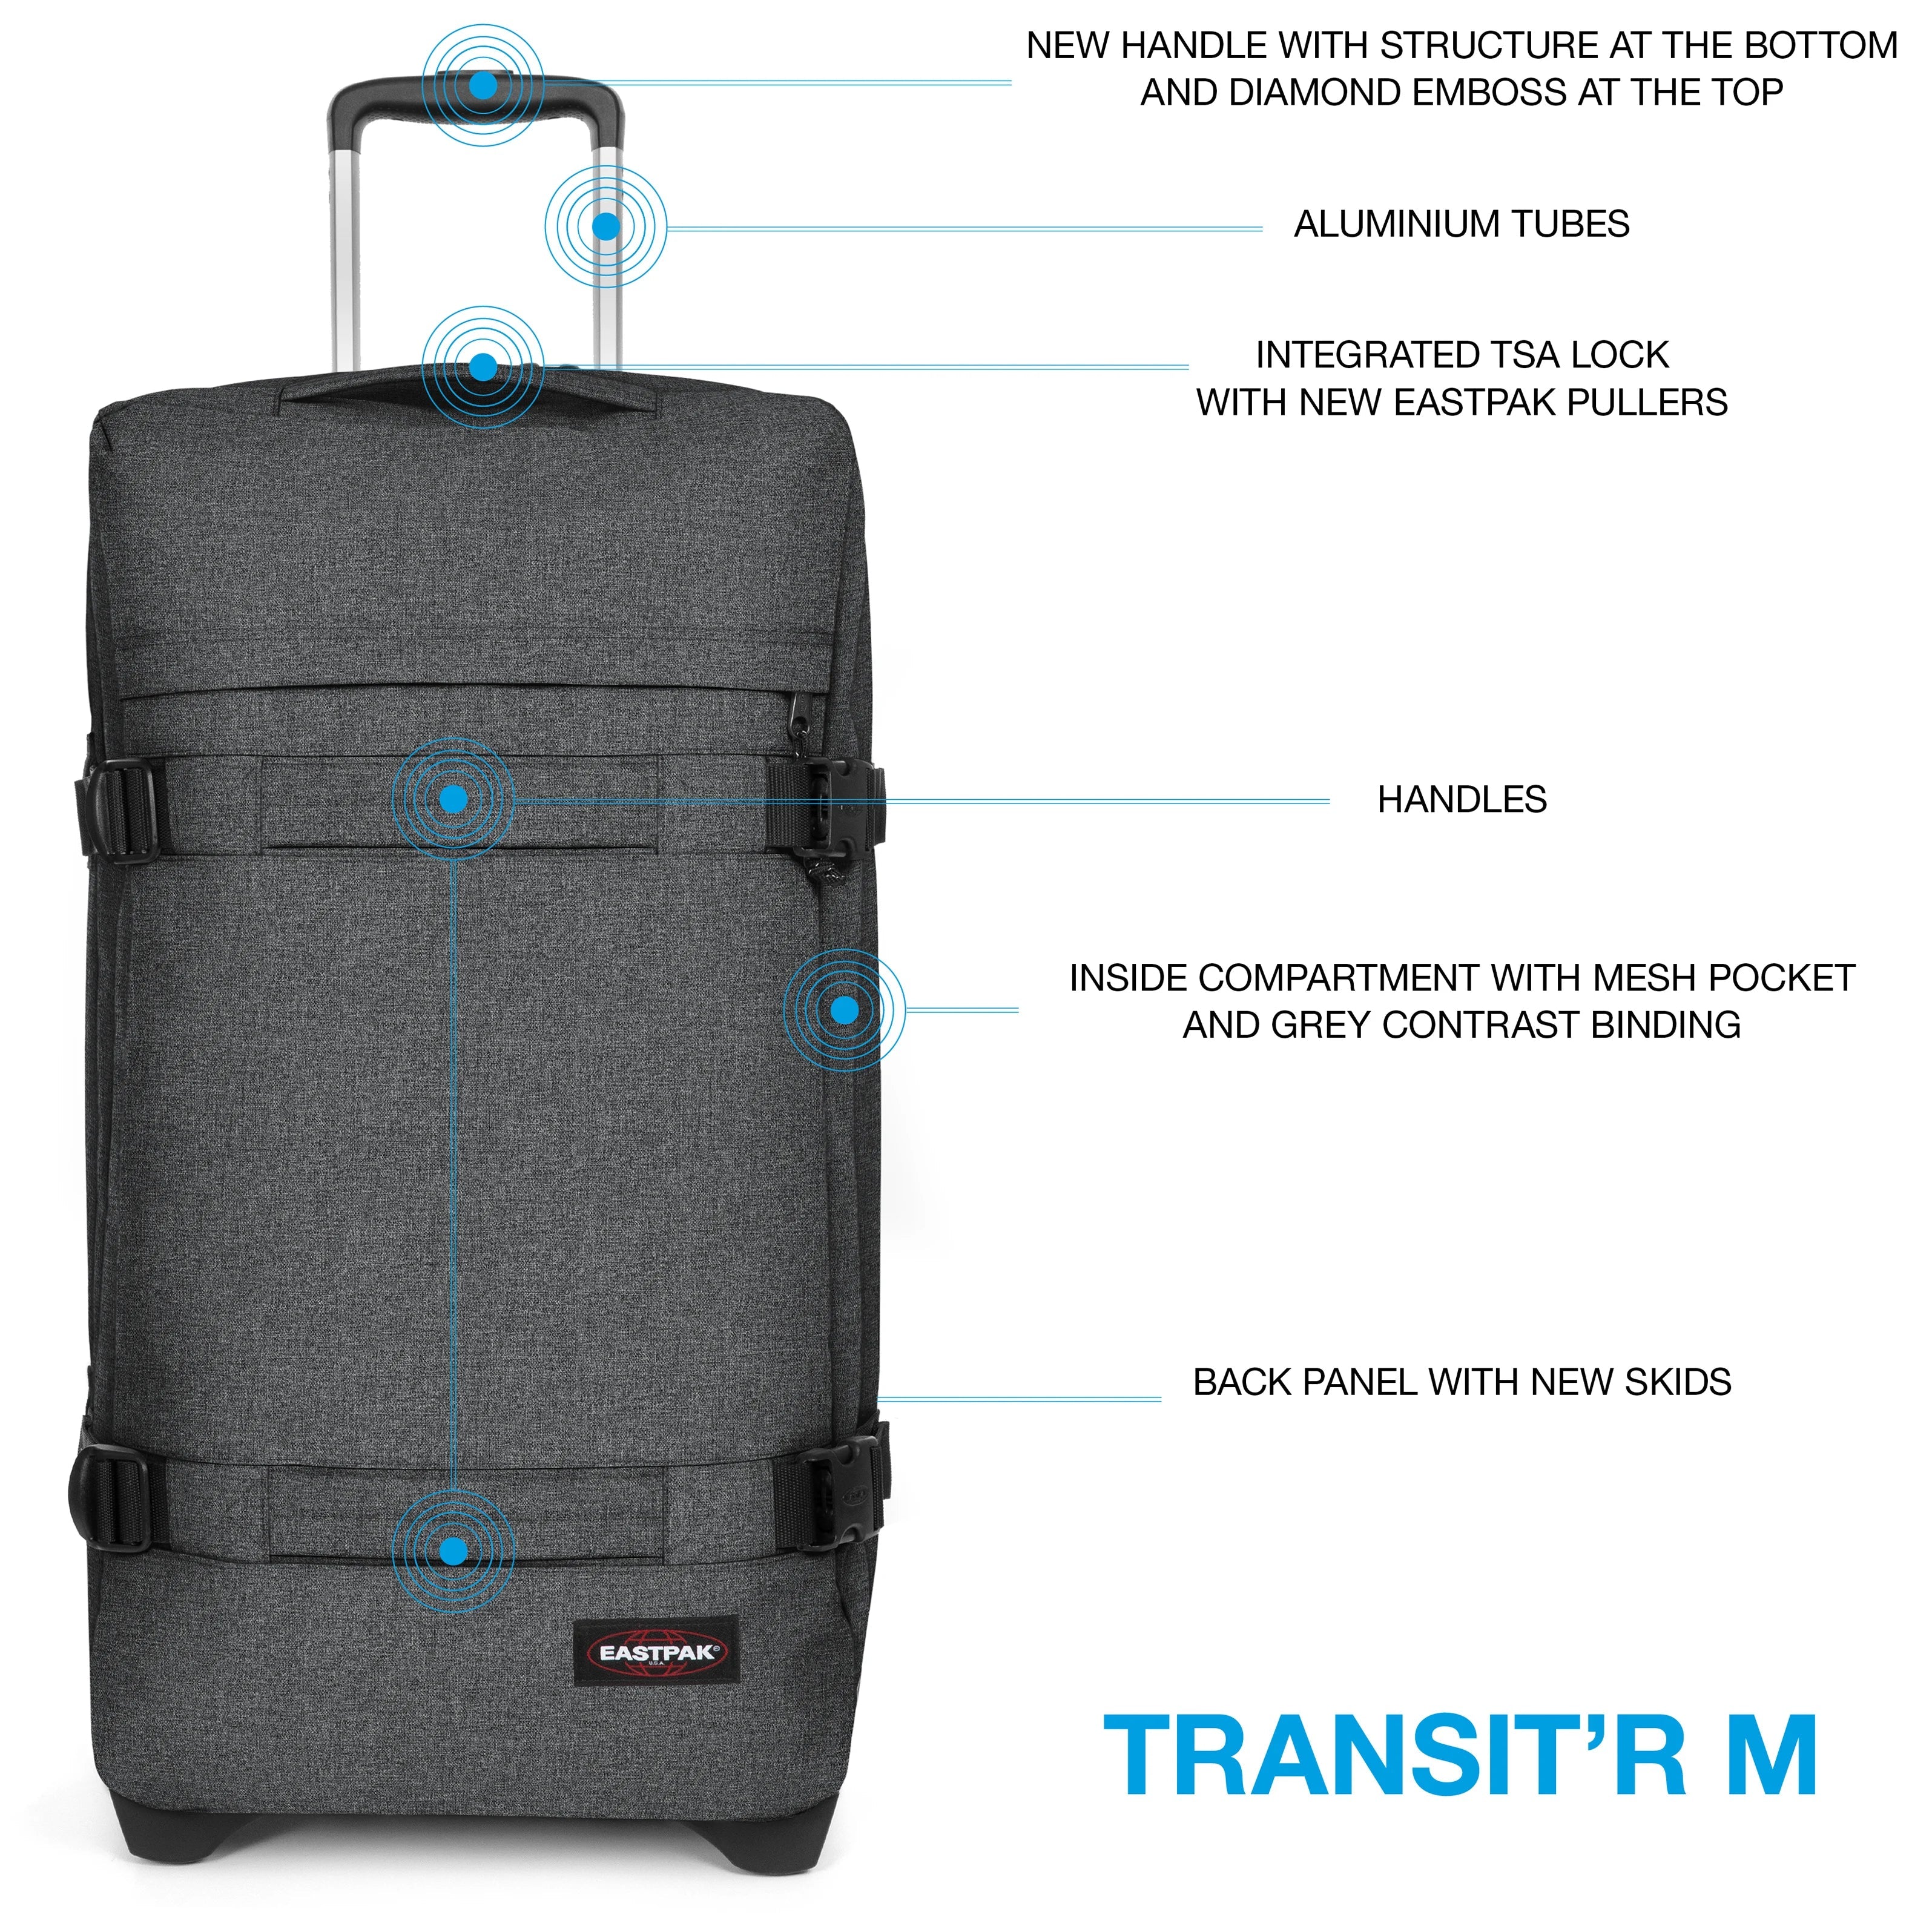 Eastpak Authentic Travel Transit'r M Rolling Travel Bag 67 cm - Black Denim